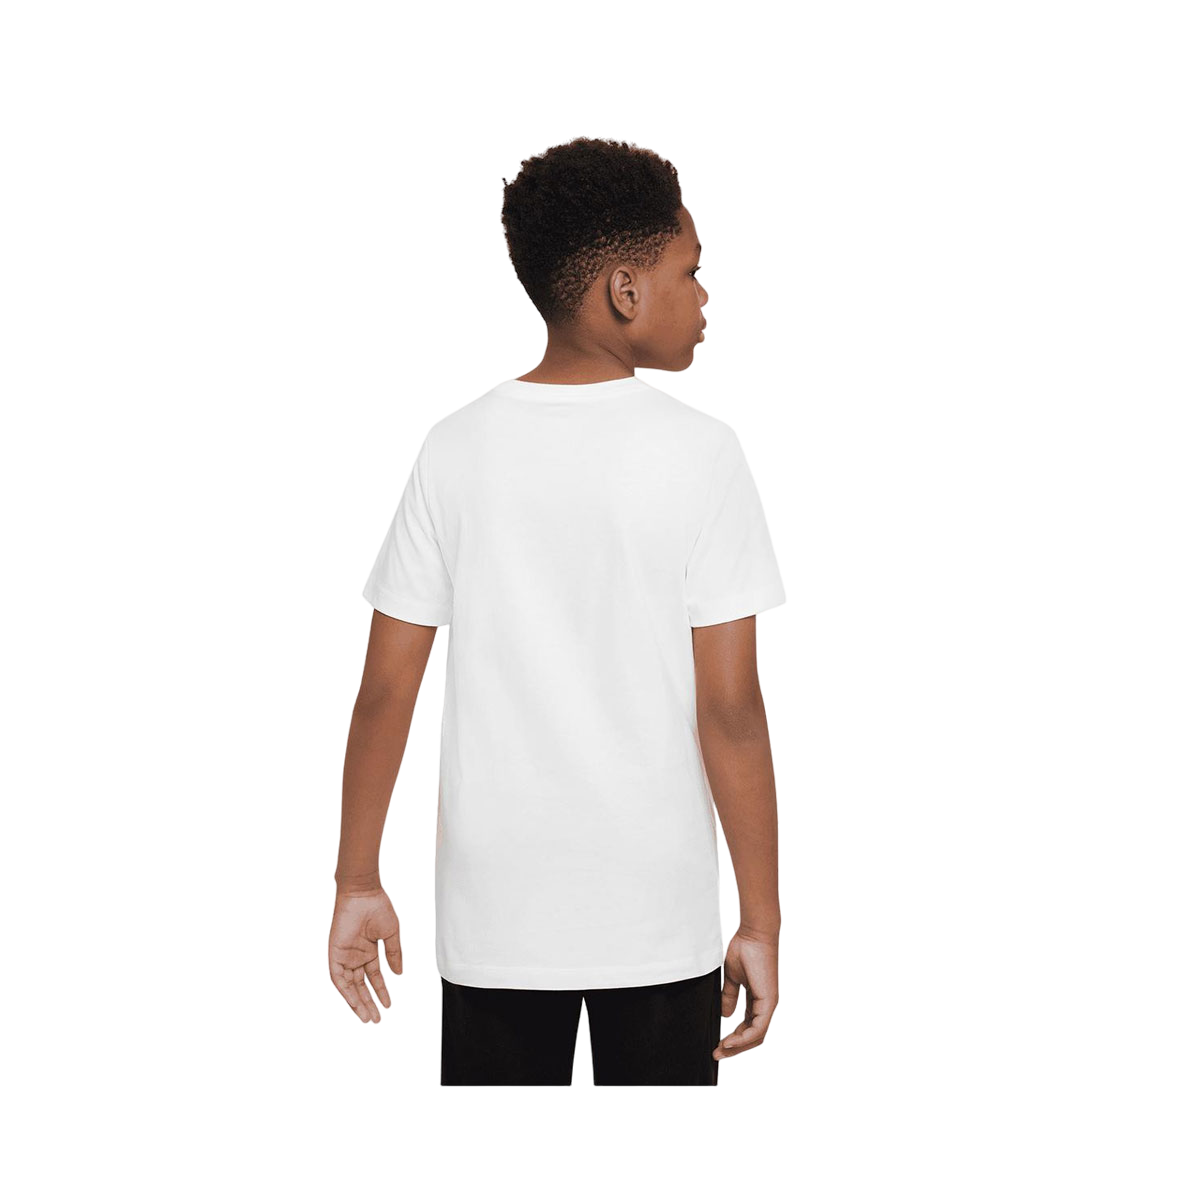 Nike Child's T-shirt - KickzStore